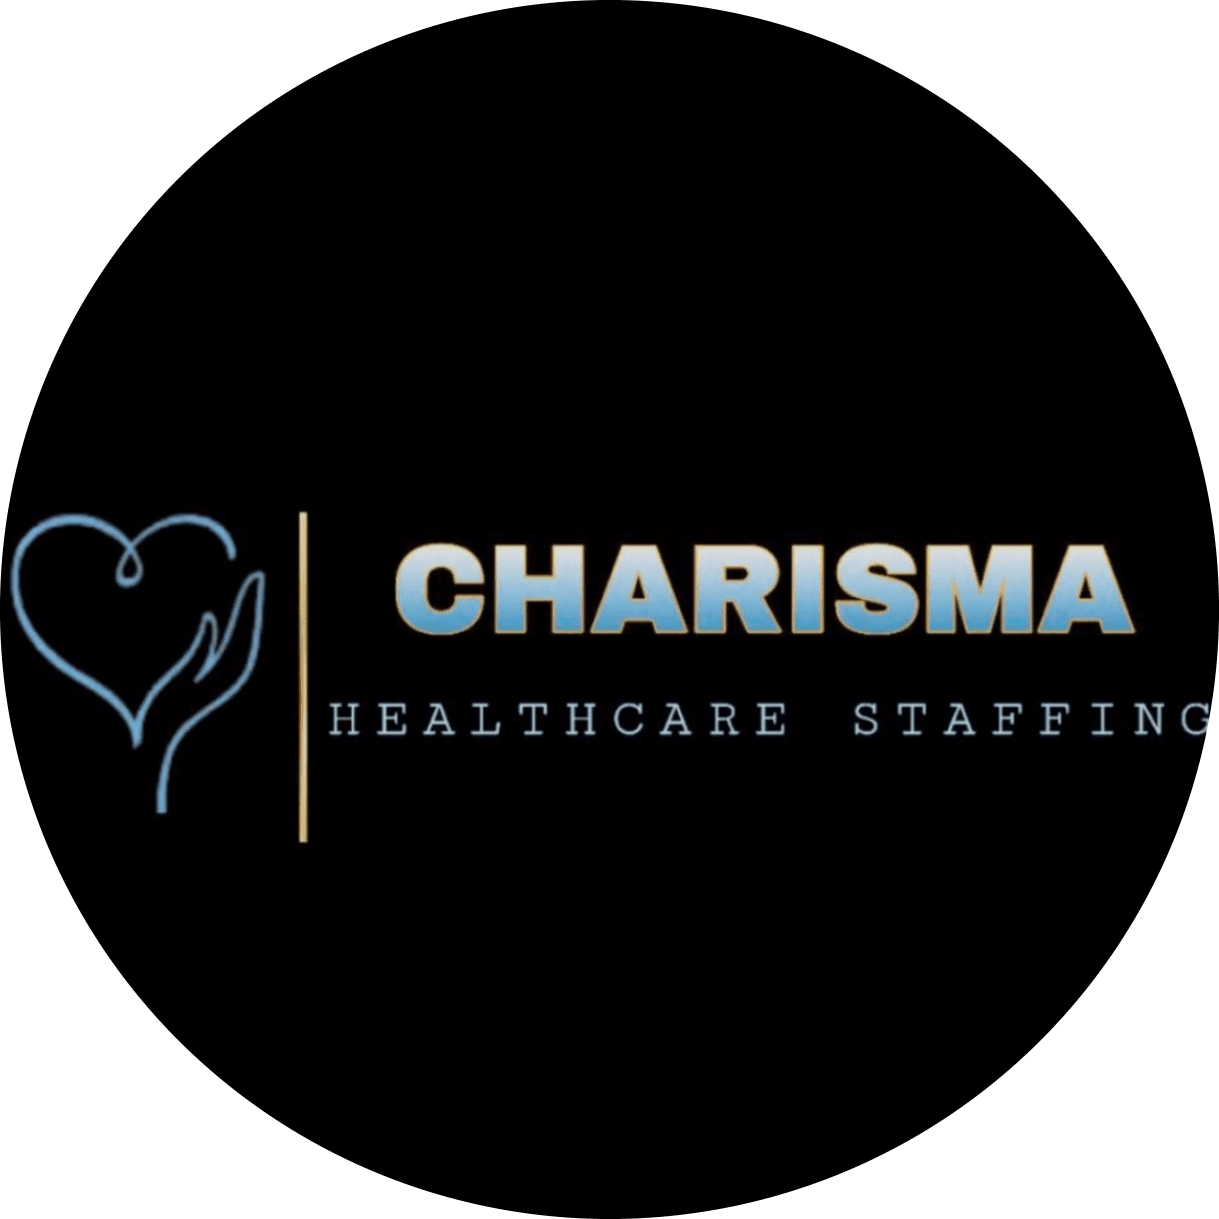 Charisma Healthcare Staffing